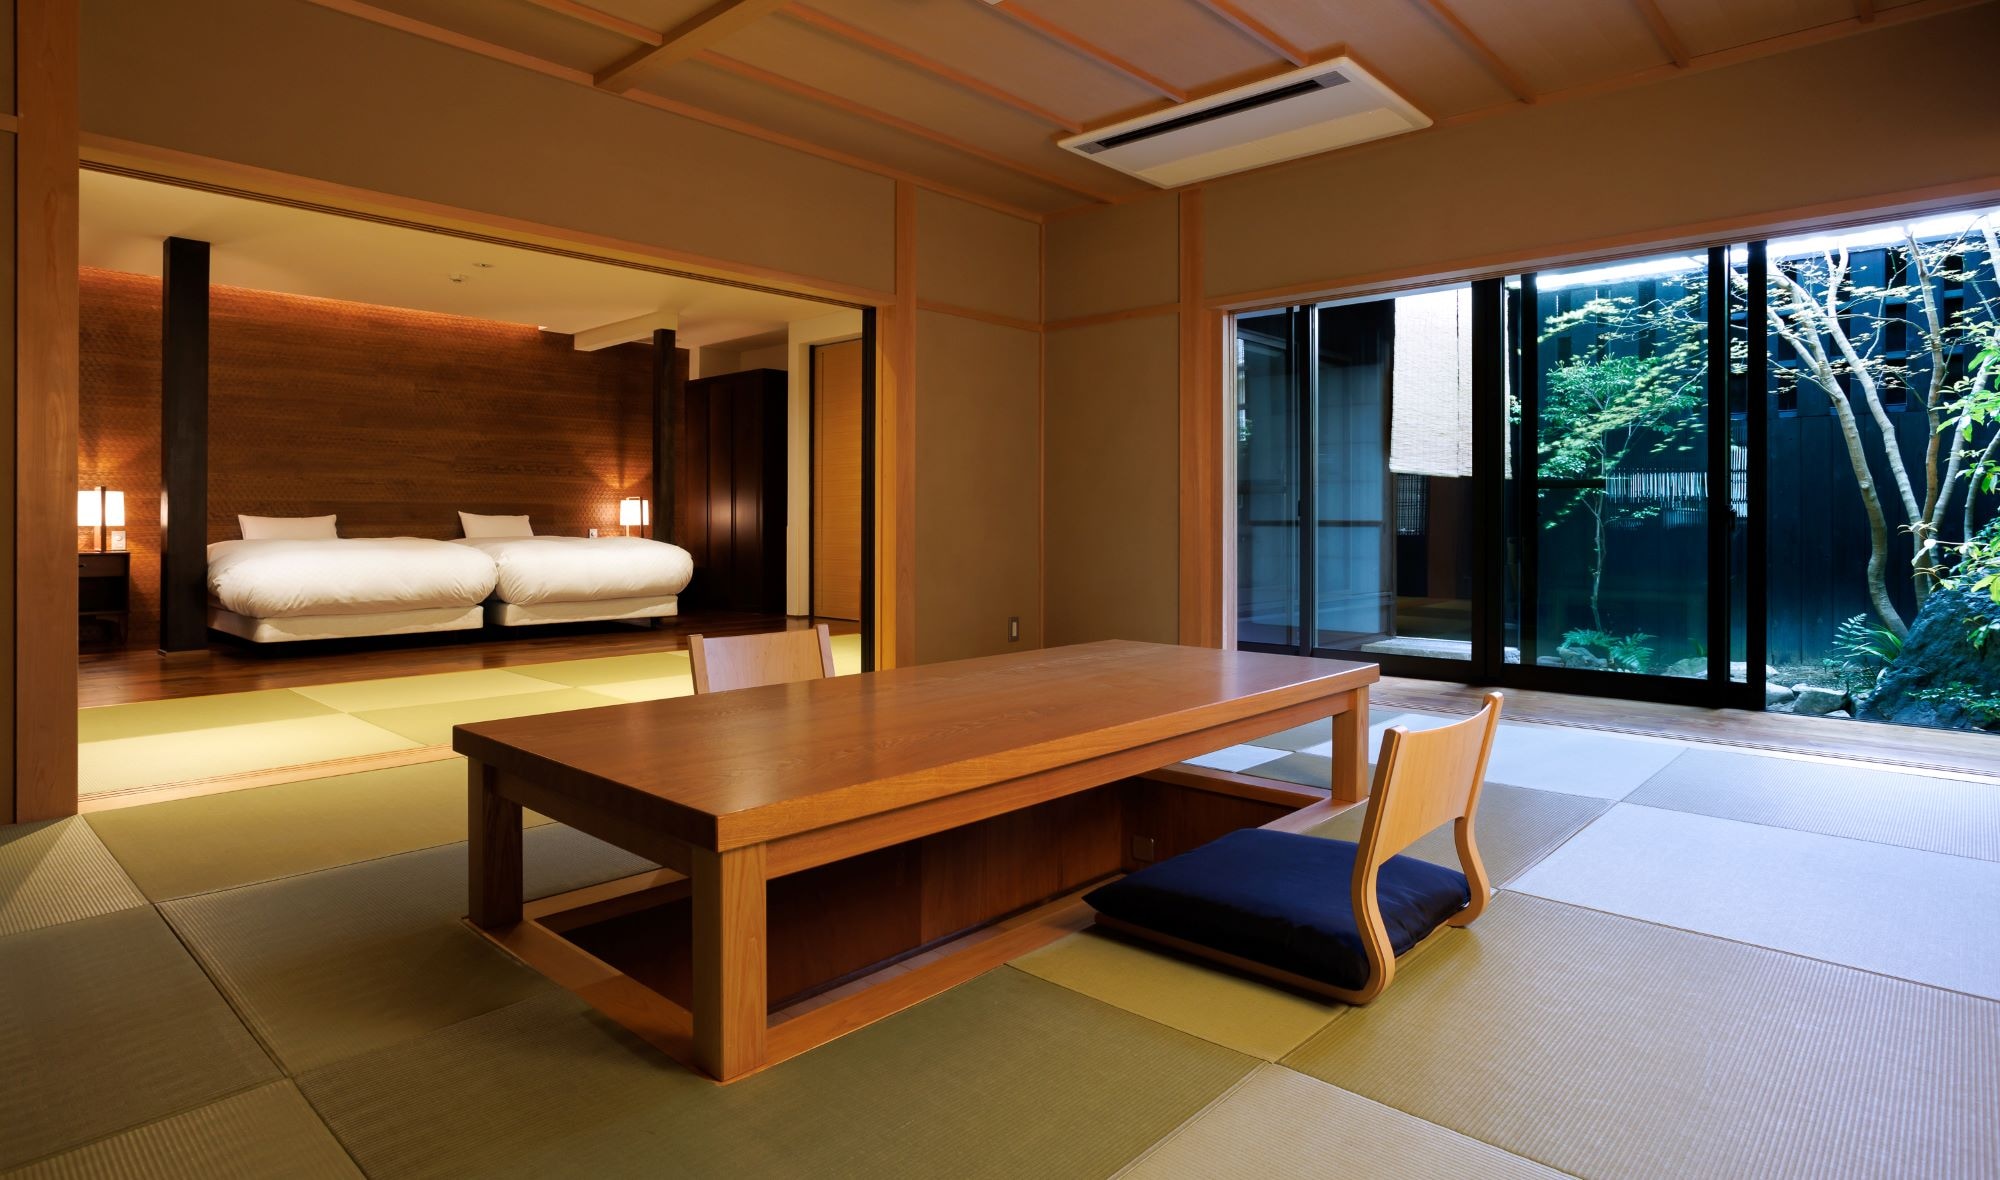 Garden Japanese-style bedroom